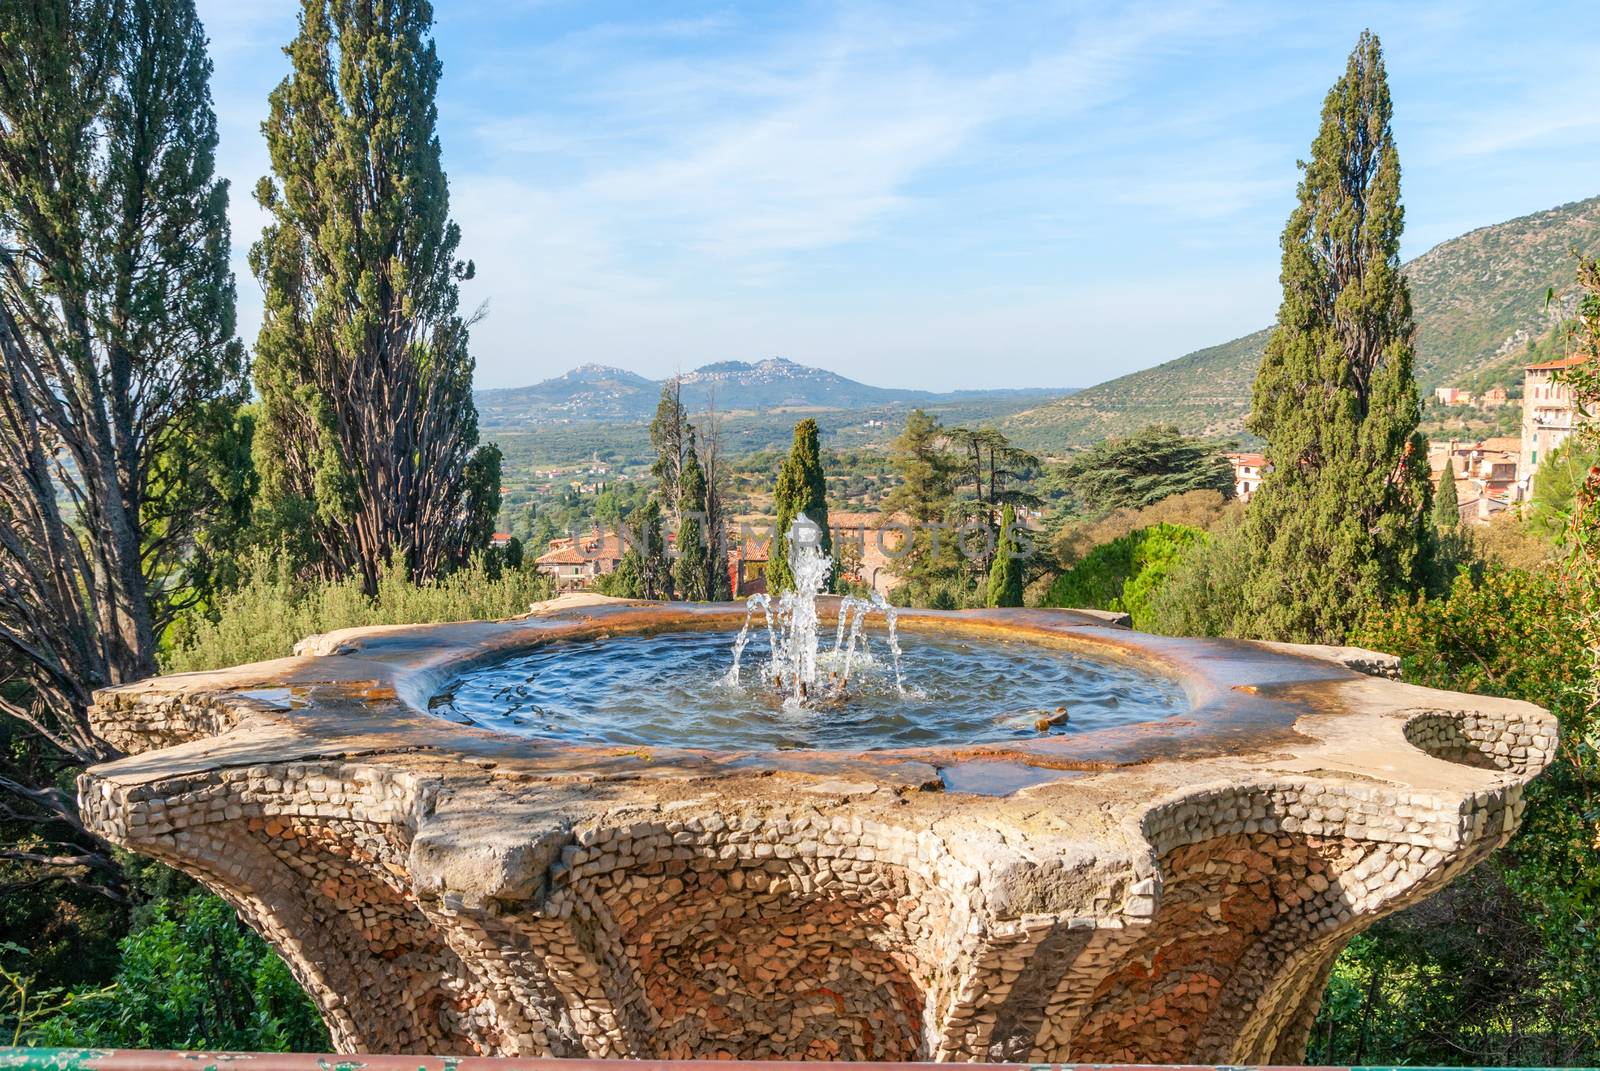 Antique historic fountain, iconic landmark in Villa d'Este, Tivoli, Italy.